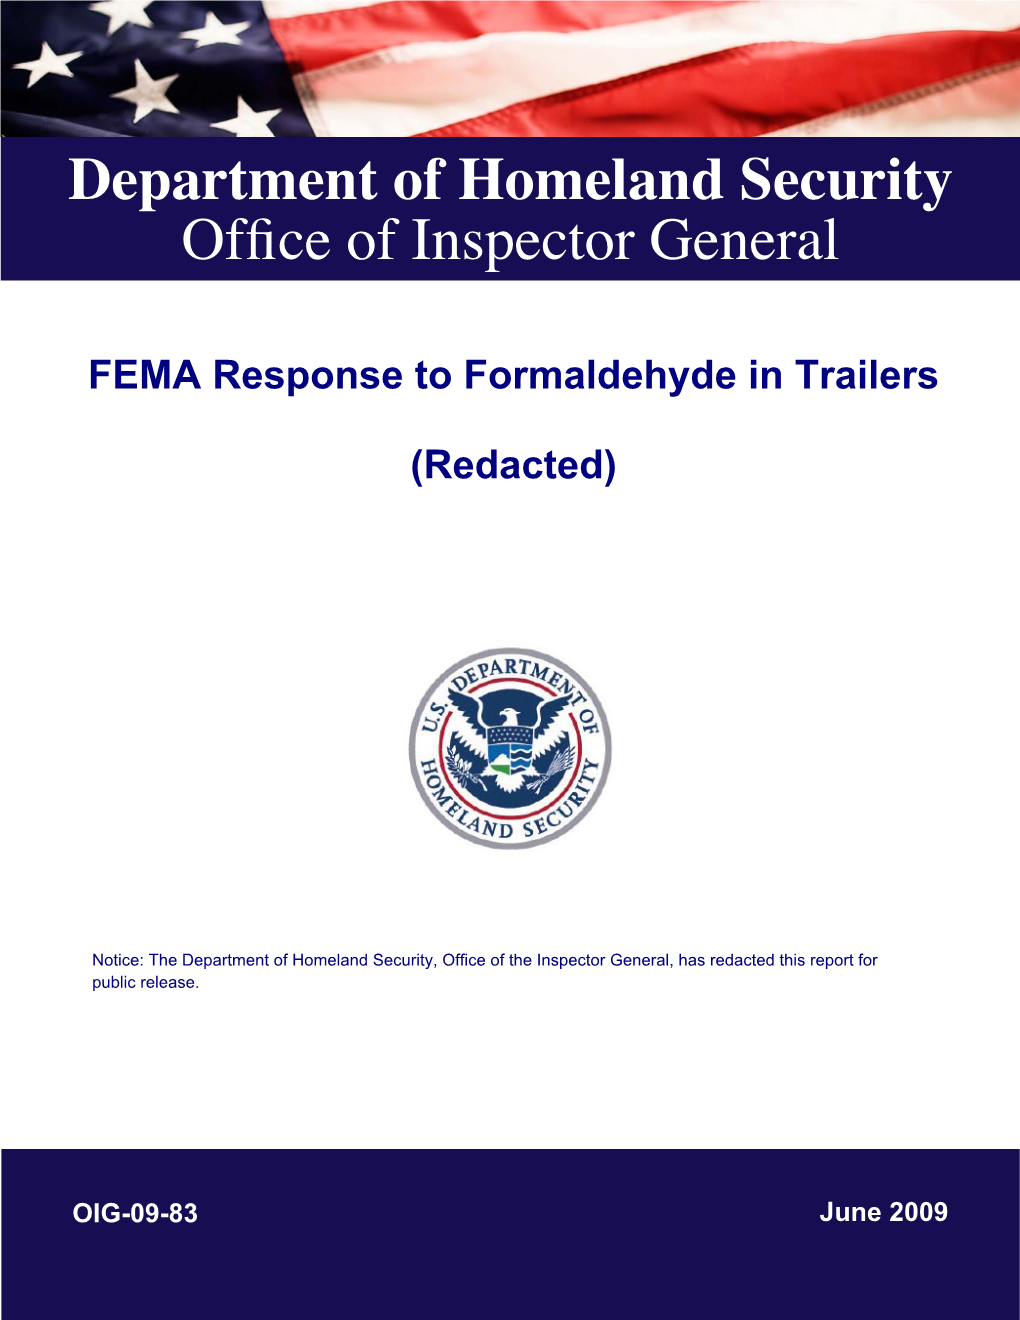 FEMA Response to Formaldehyde in Trailer, OIG-09-83